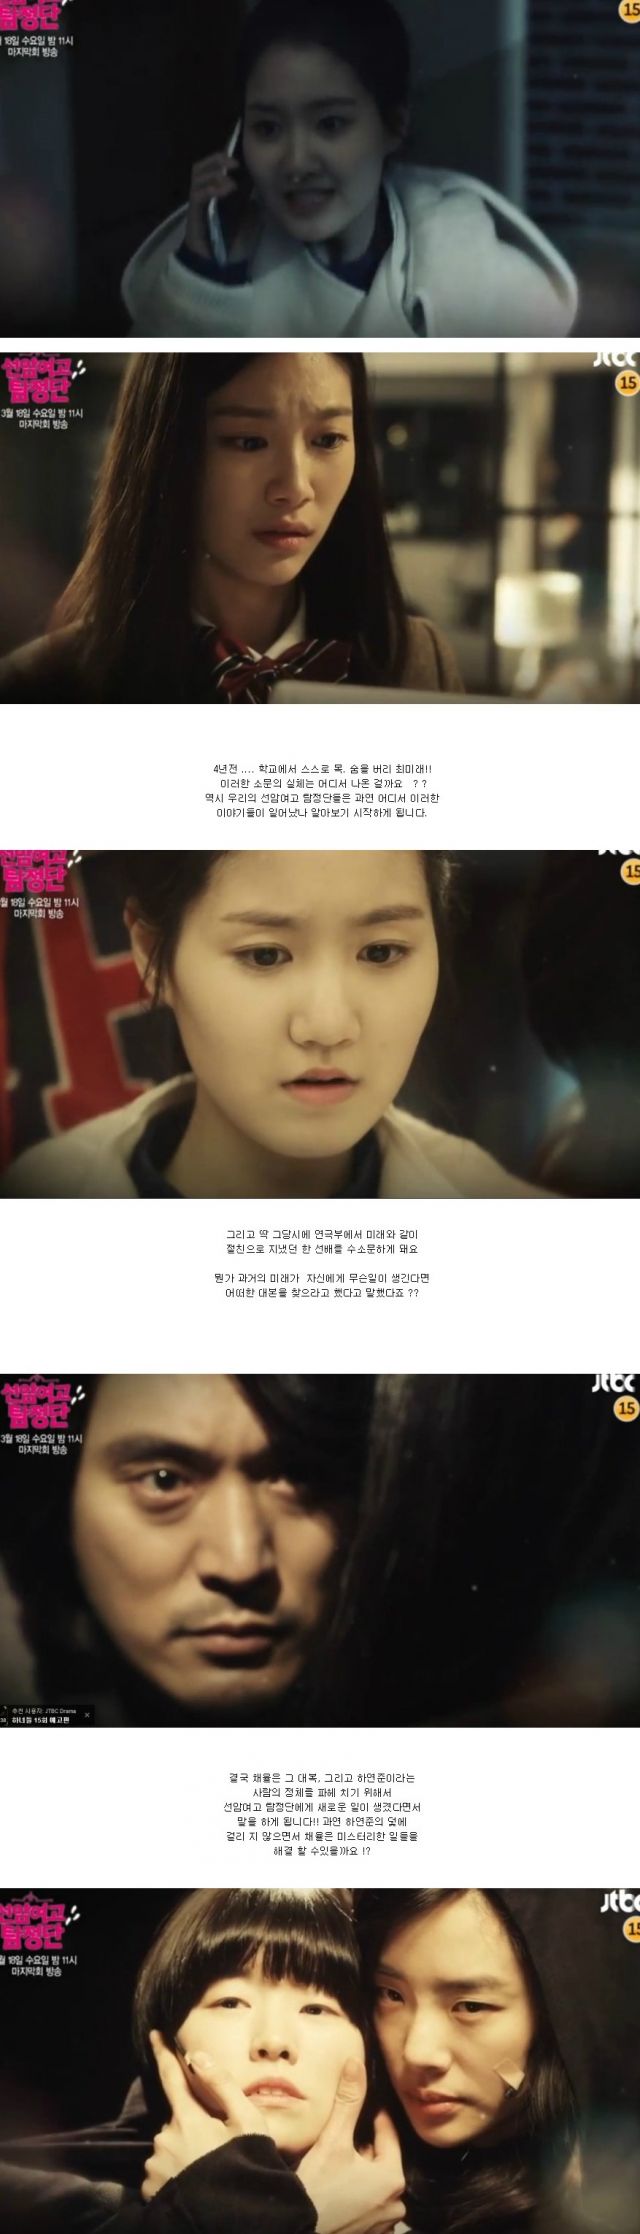 final episode 14 captures for the Korean drama 'Seonam Girls High School Investigators'